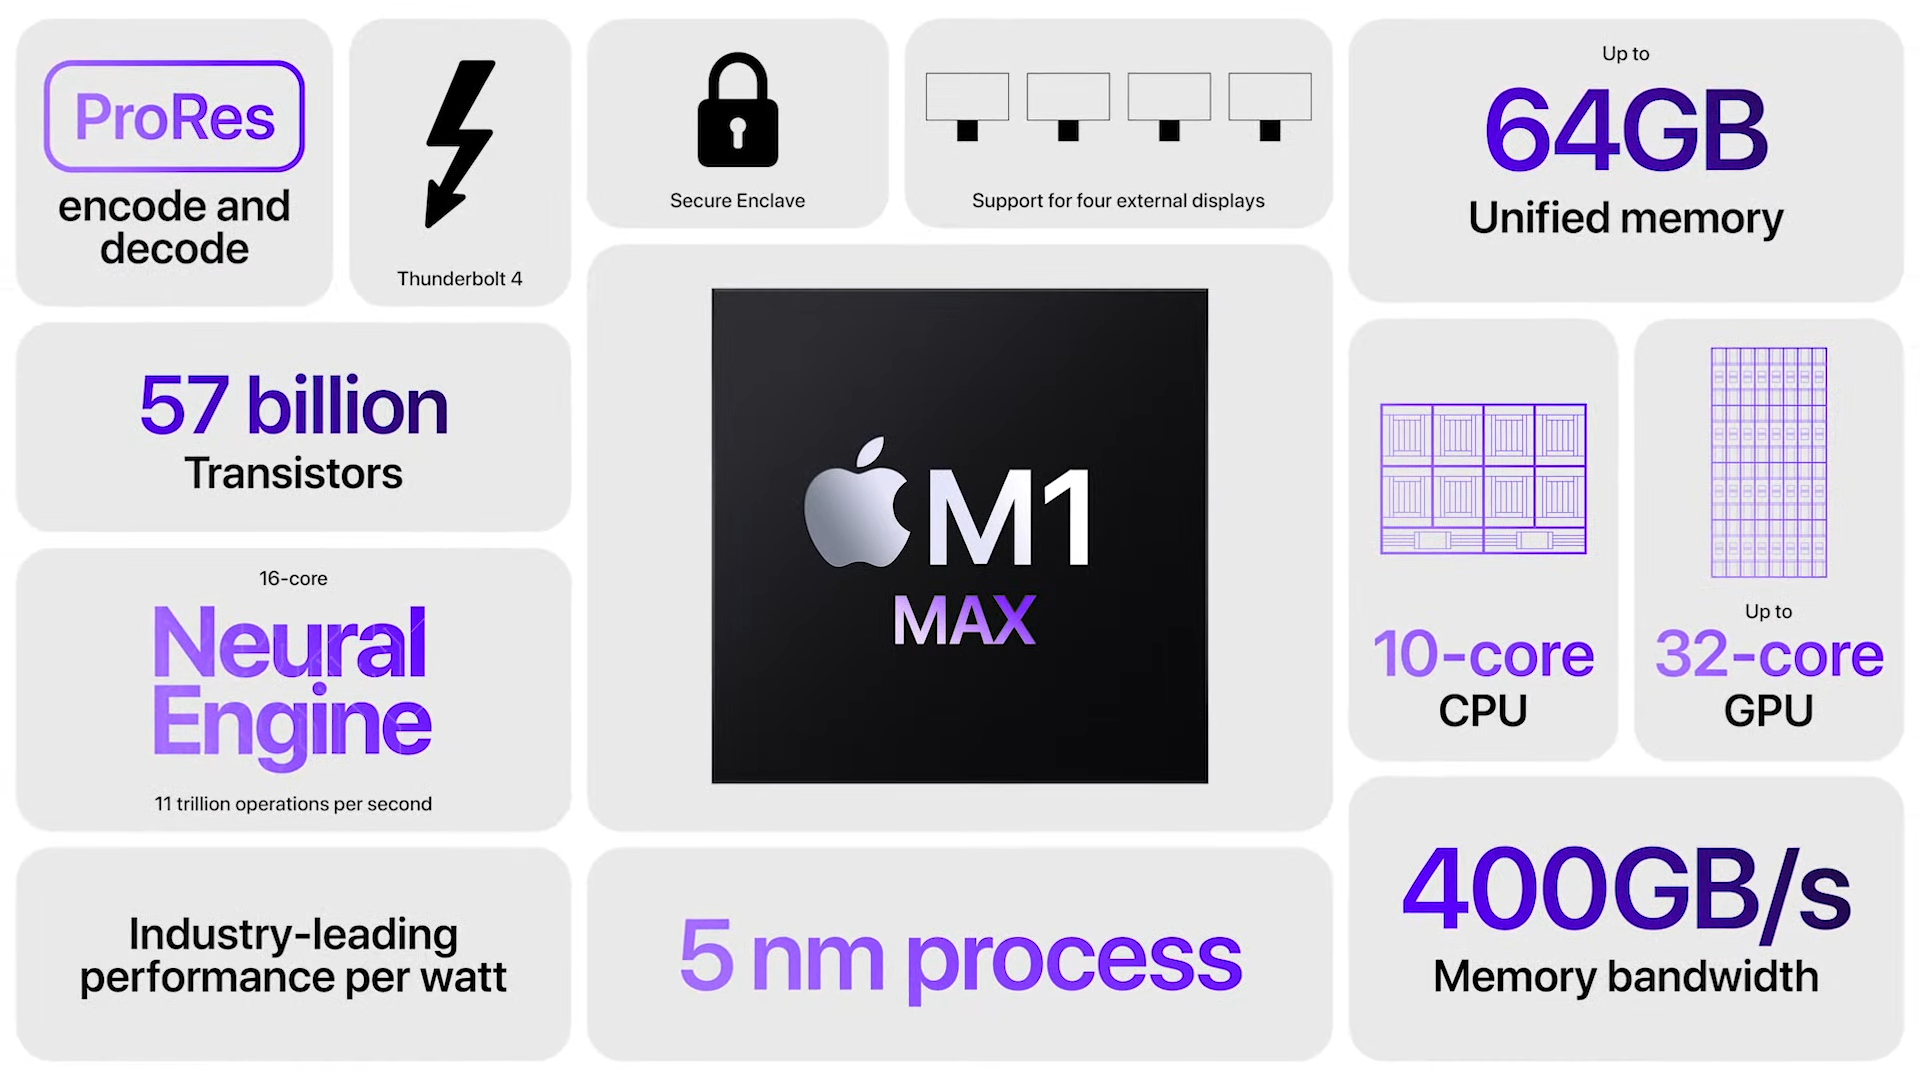 MacBook Pro m1 max overview